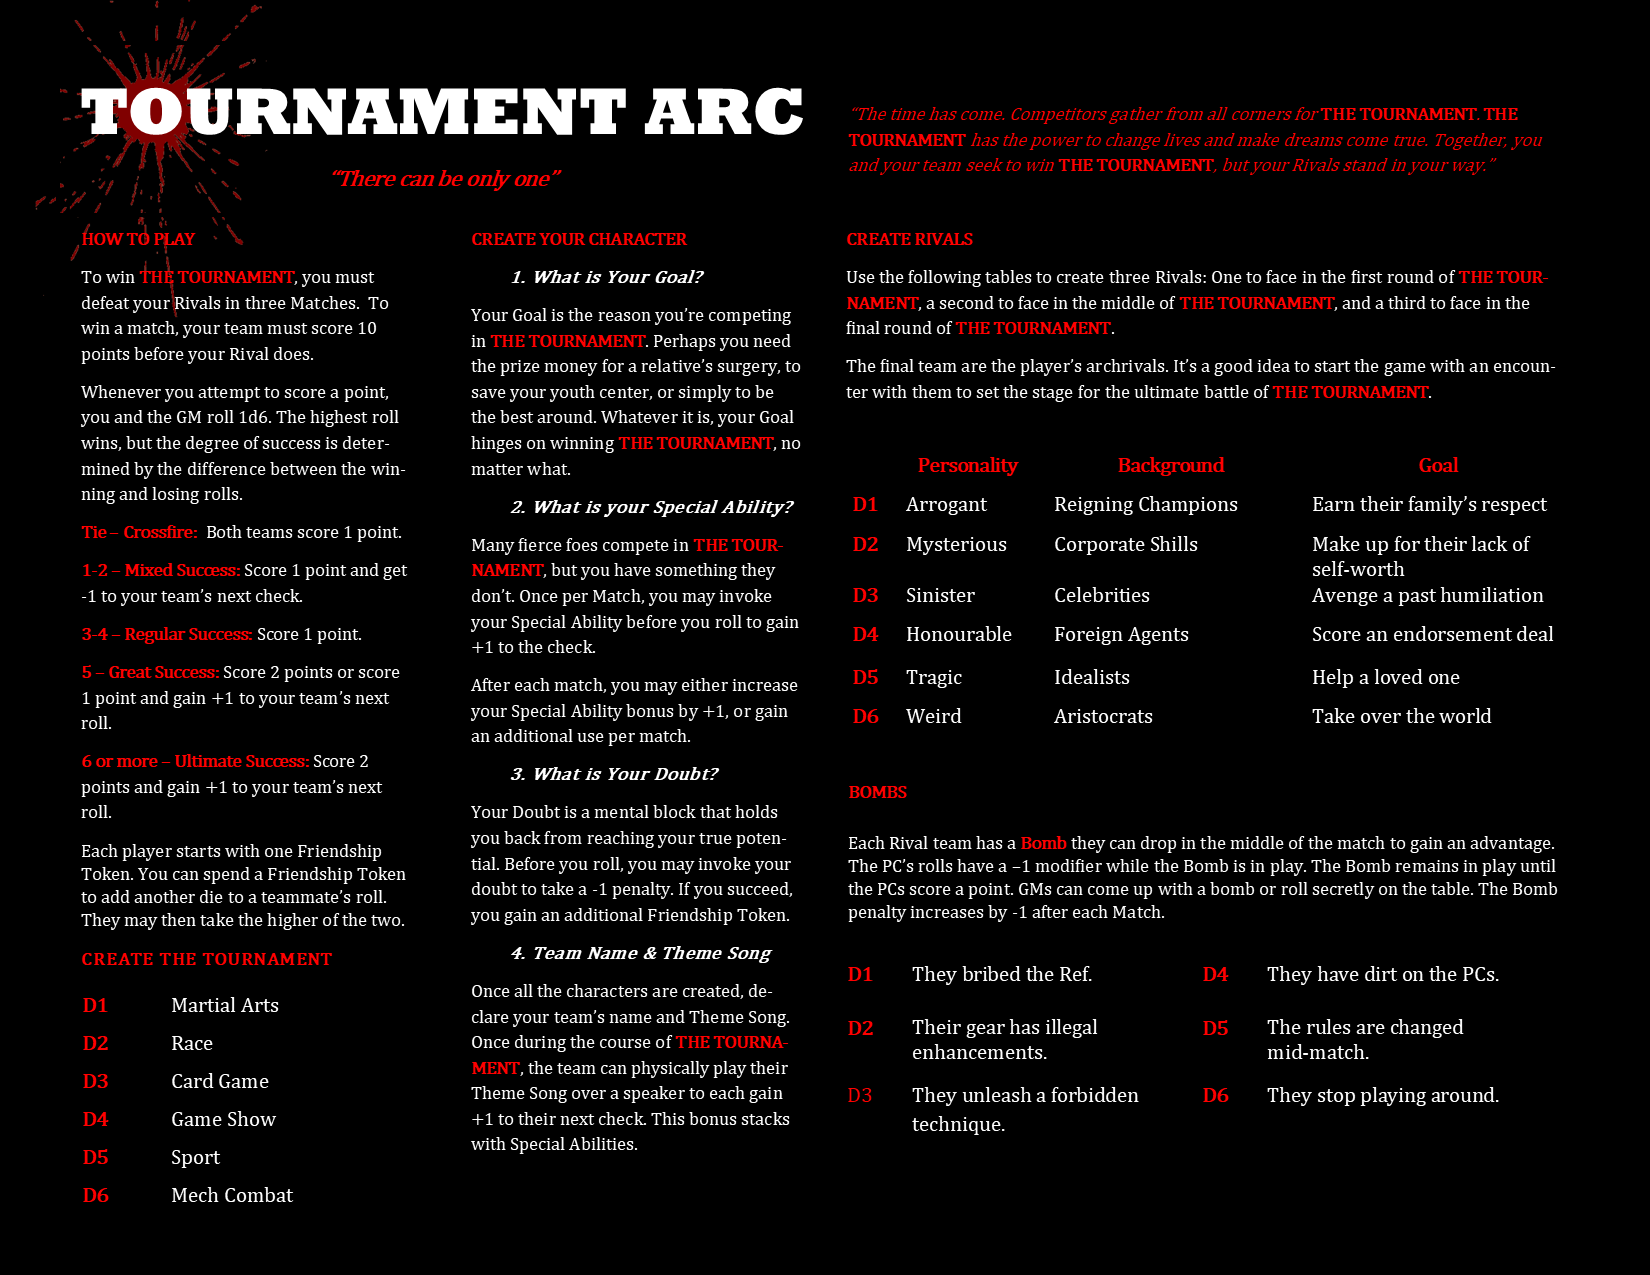 What Makes Tournament Arcs So Special?